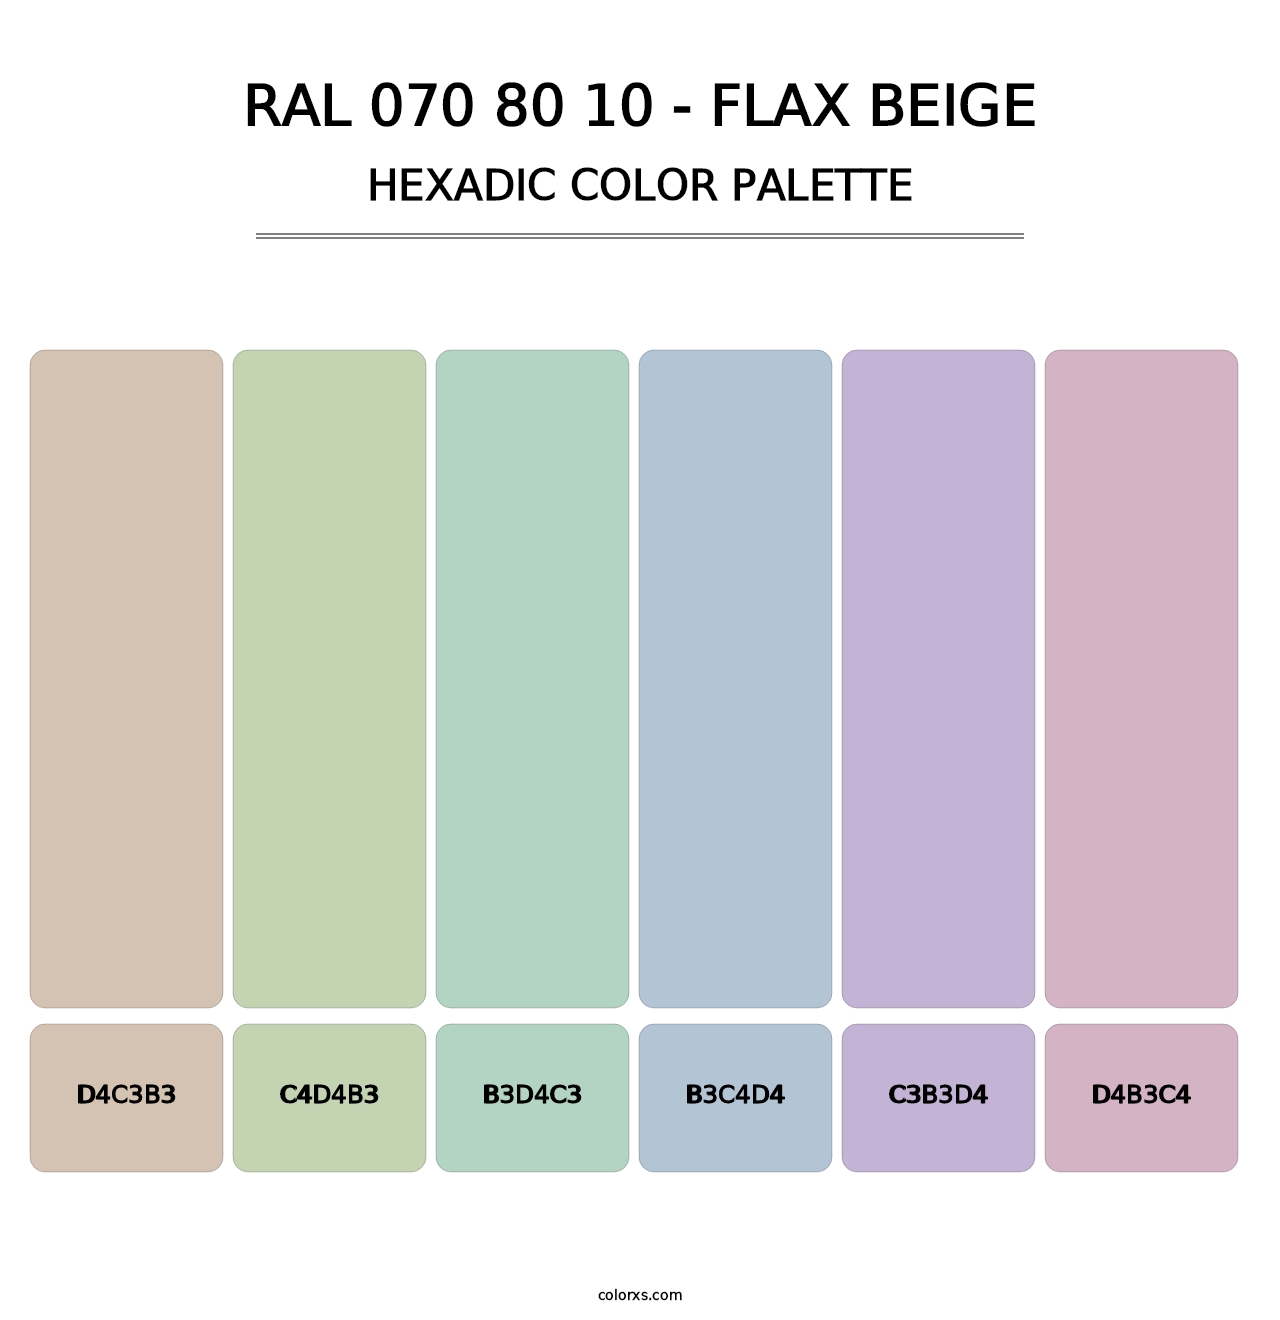 RAL 070 80 10 - Flax Beige - Hexadic Color Palette